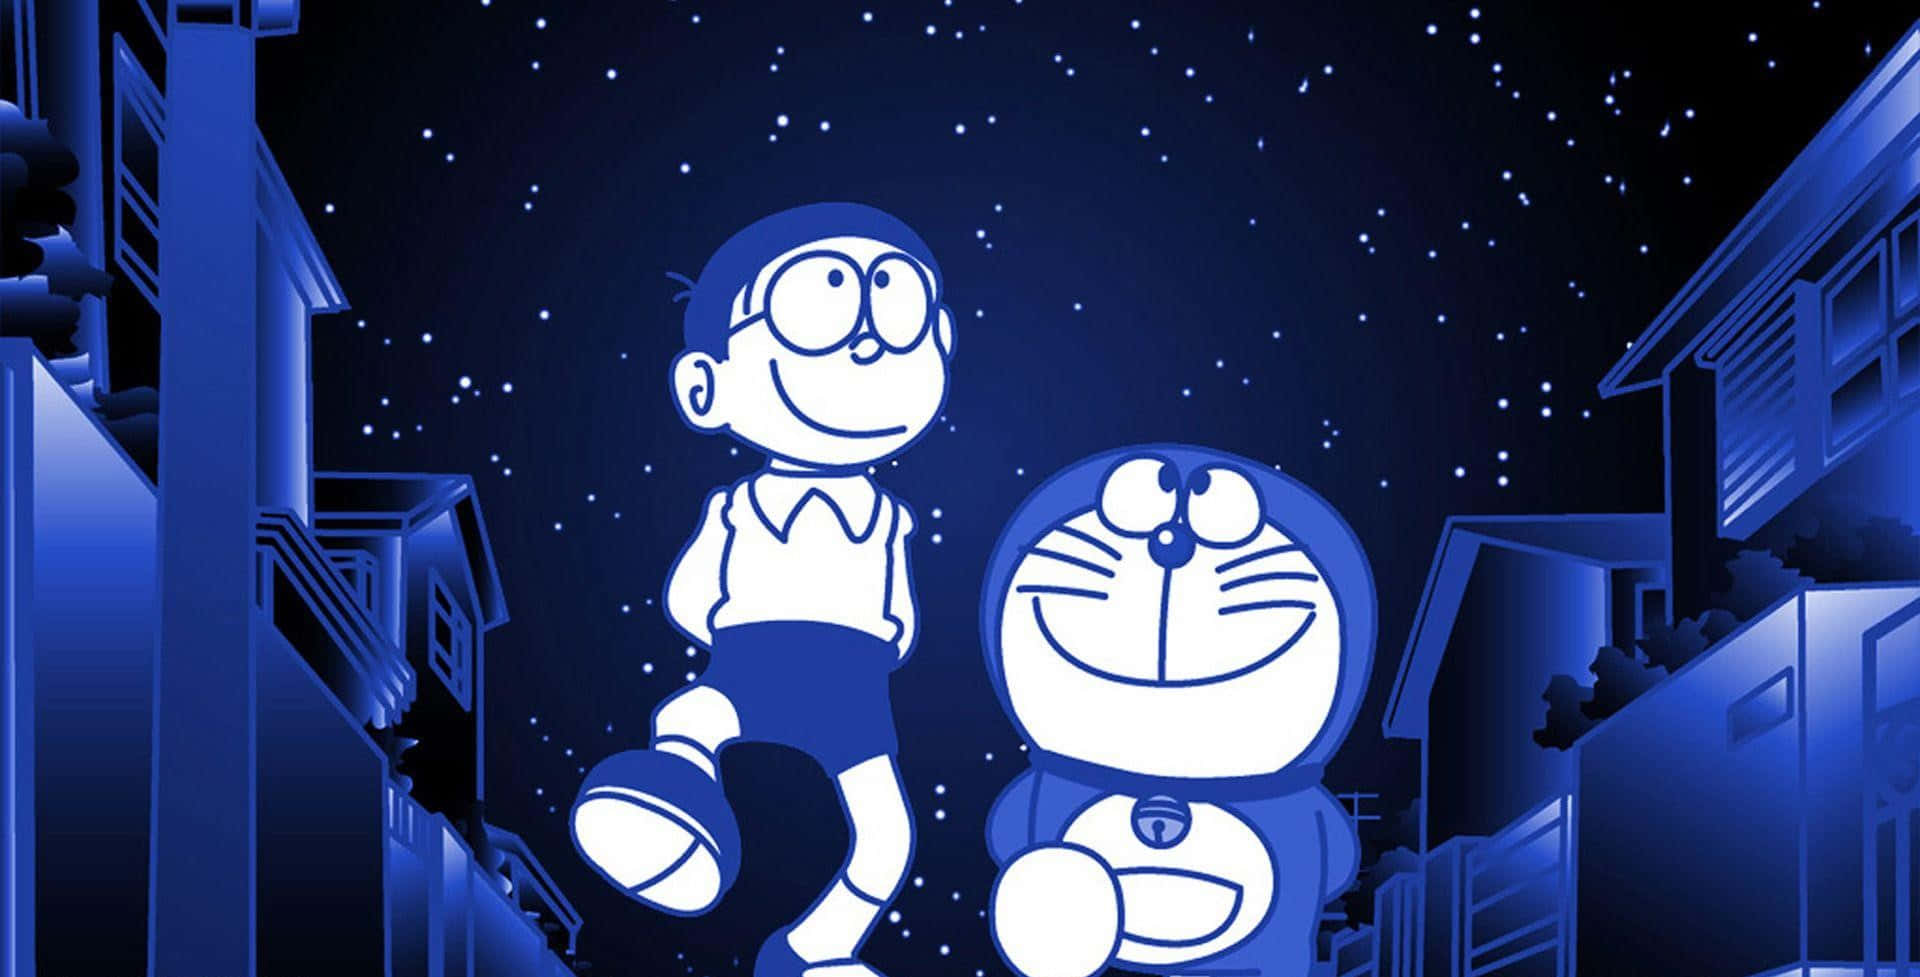 Doraemon bringing happiness and friendship